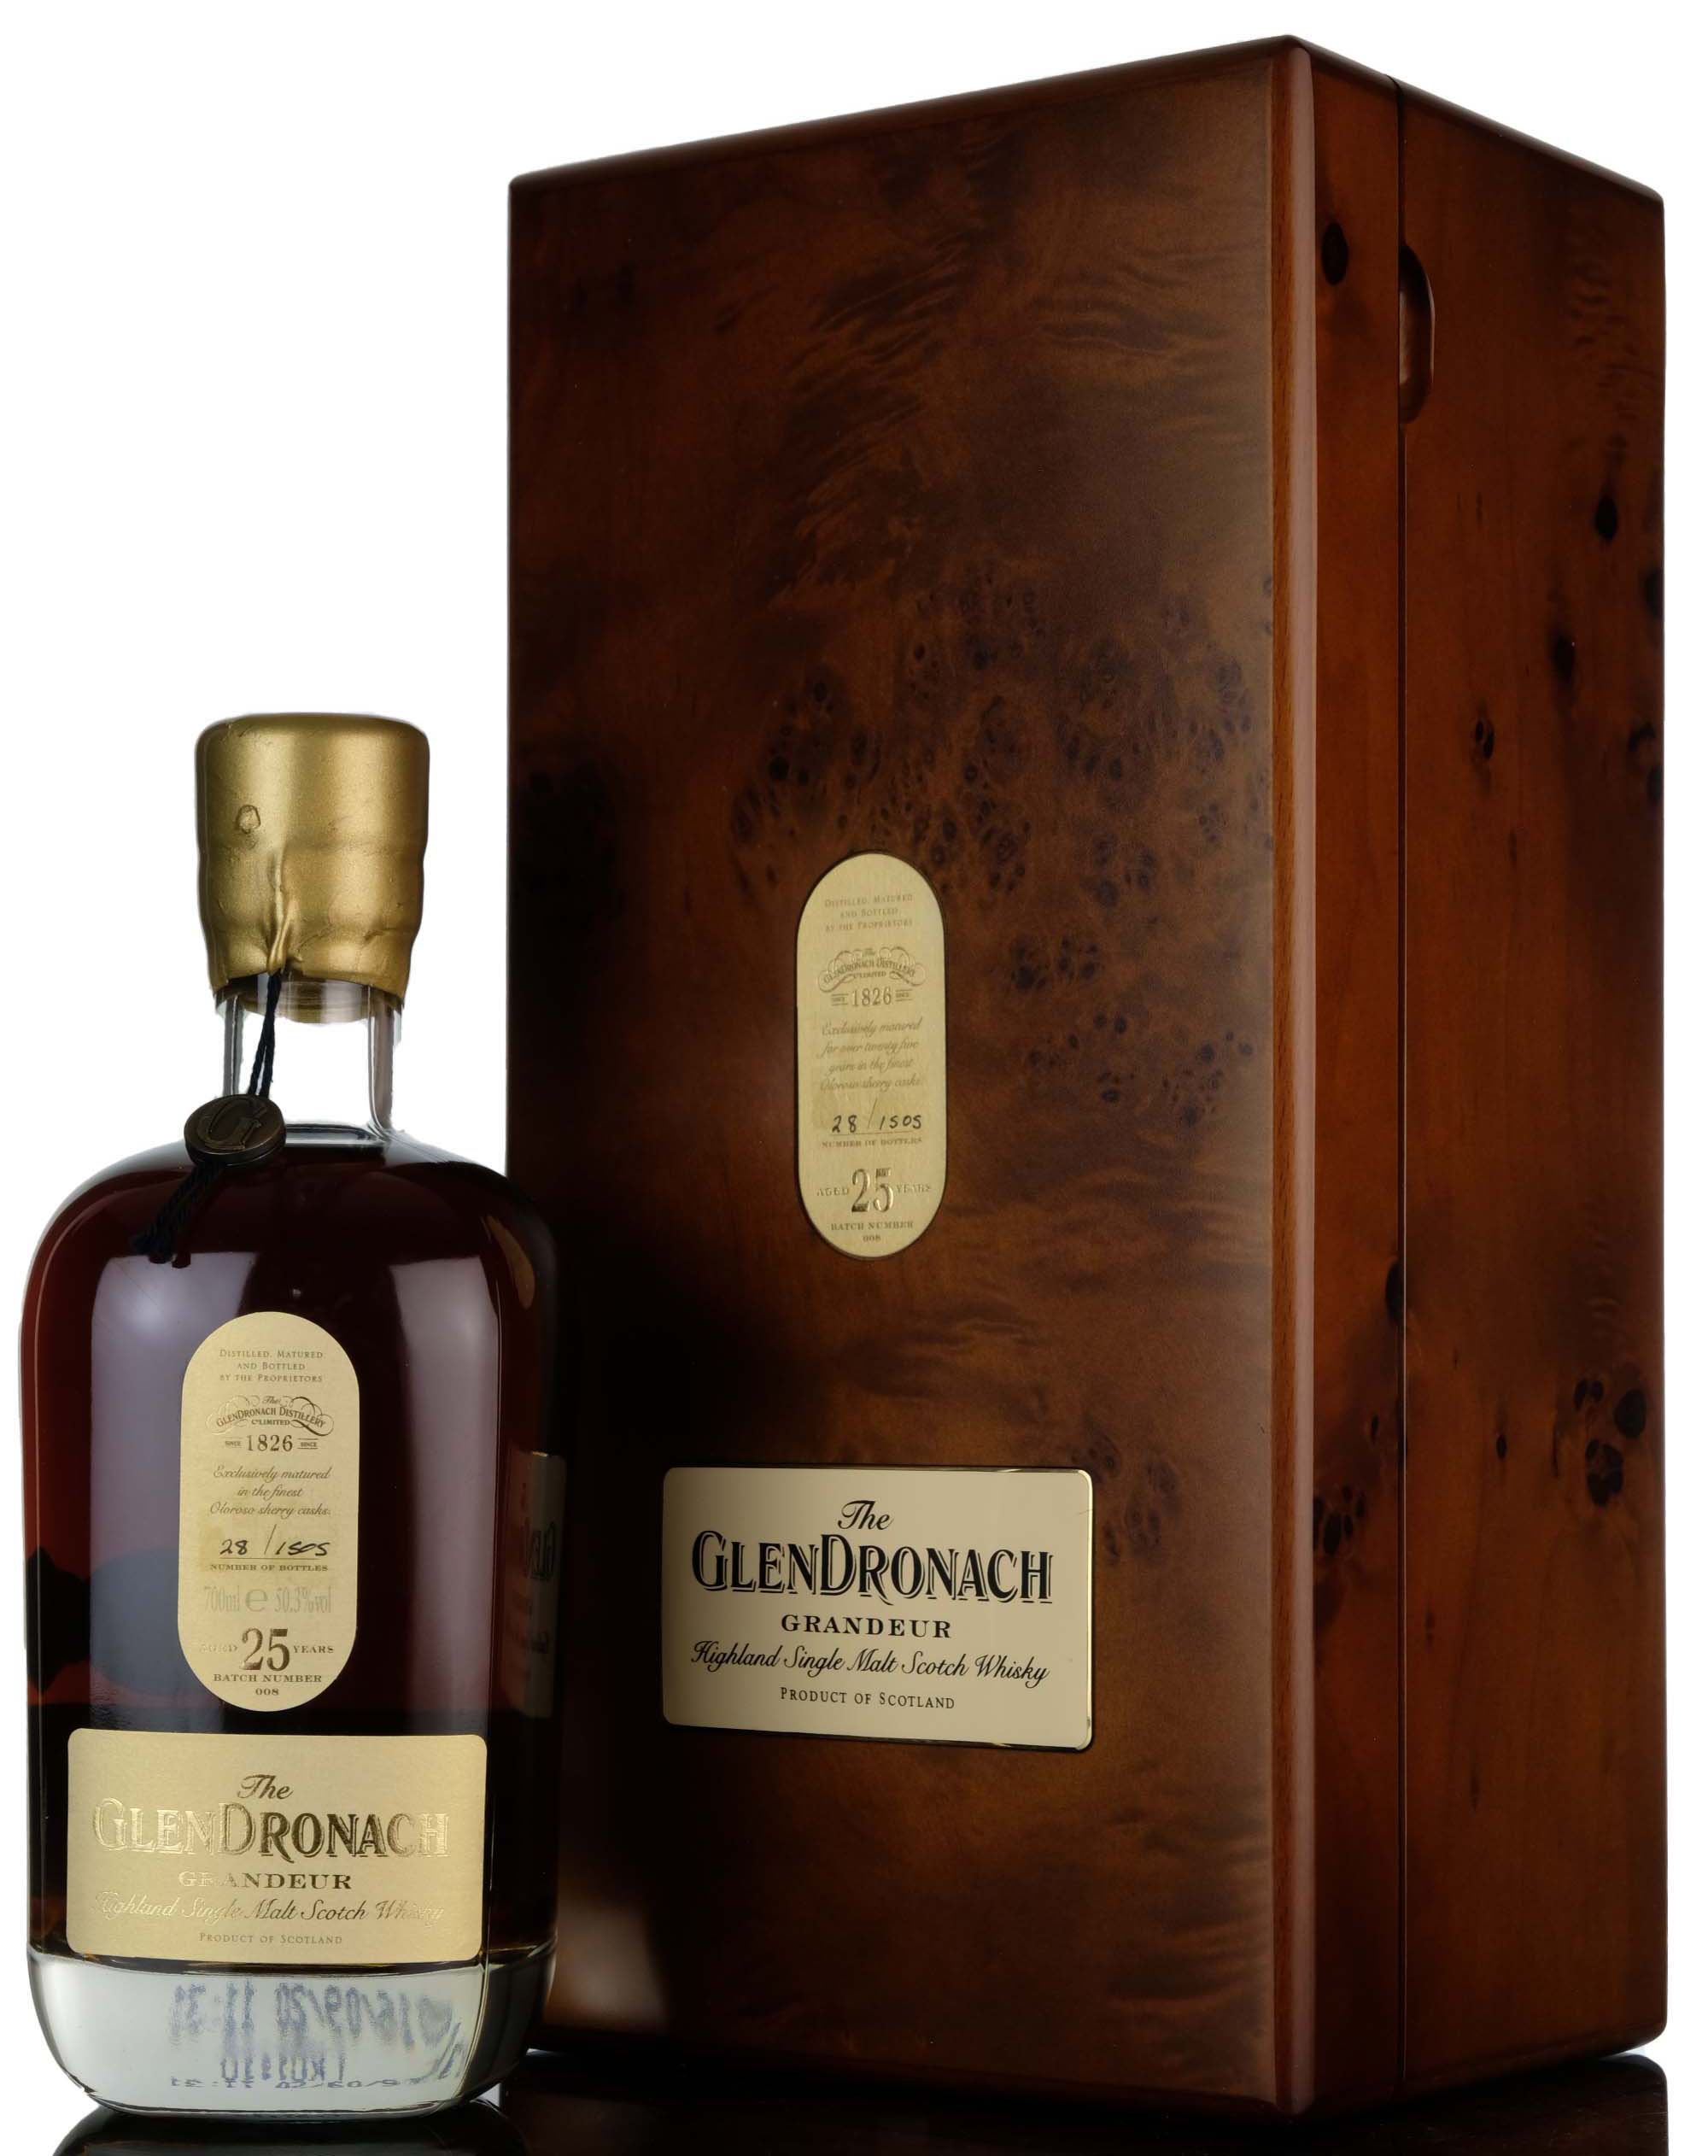 Glendronach 25 Year Old - Grandeur Batch 8 - 2016 Release